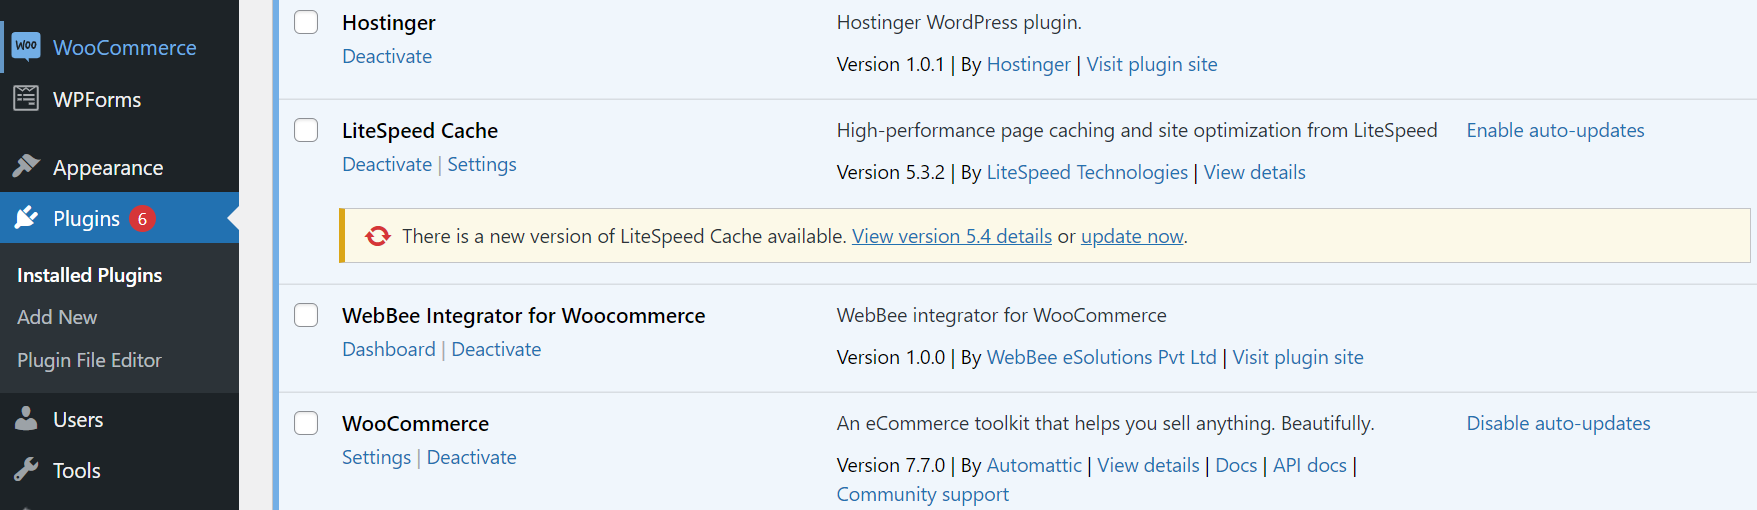 WebBee Integrator for WooCommerce